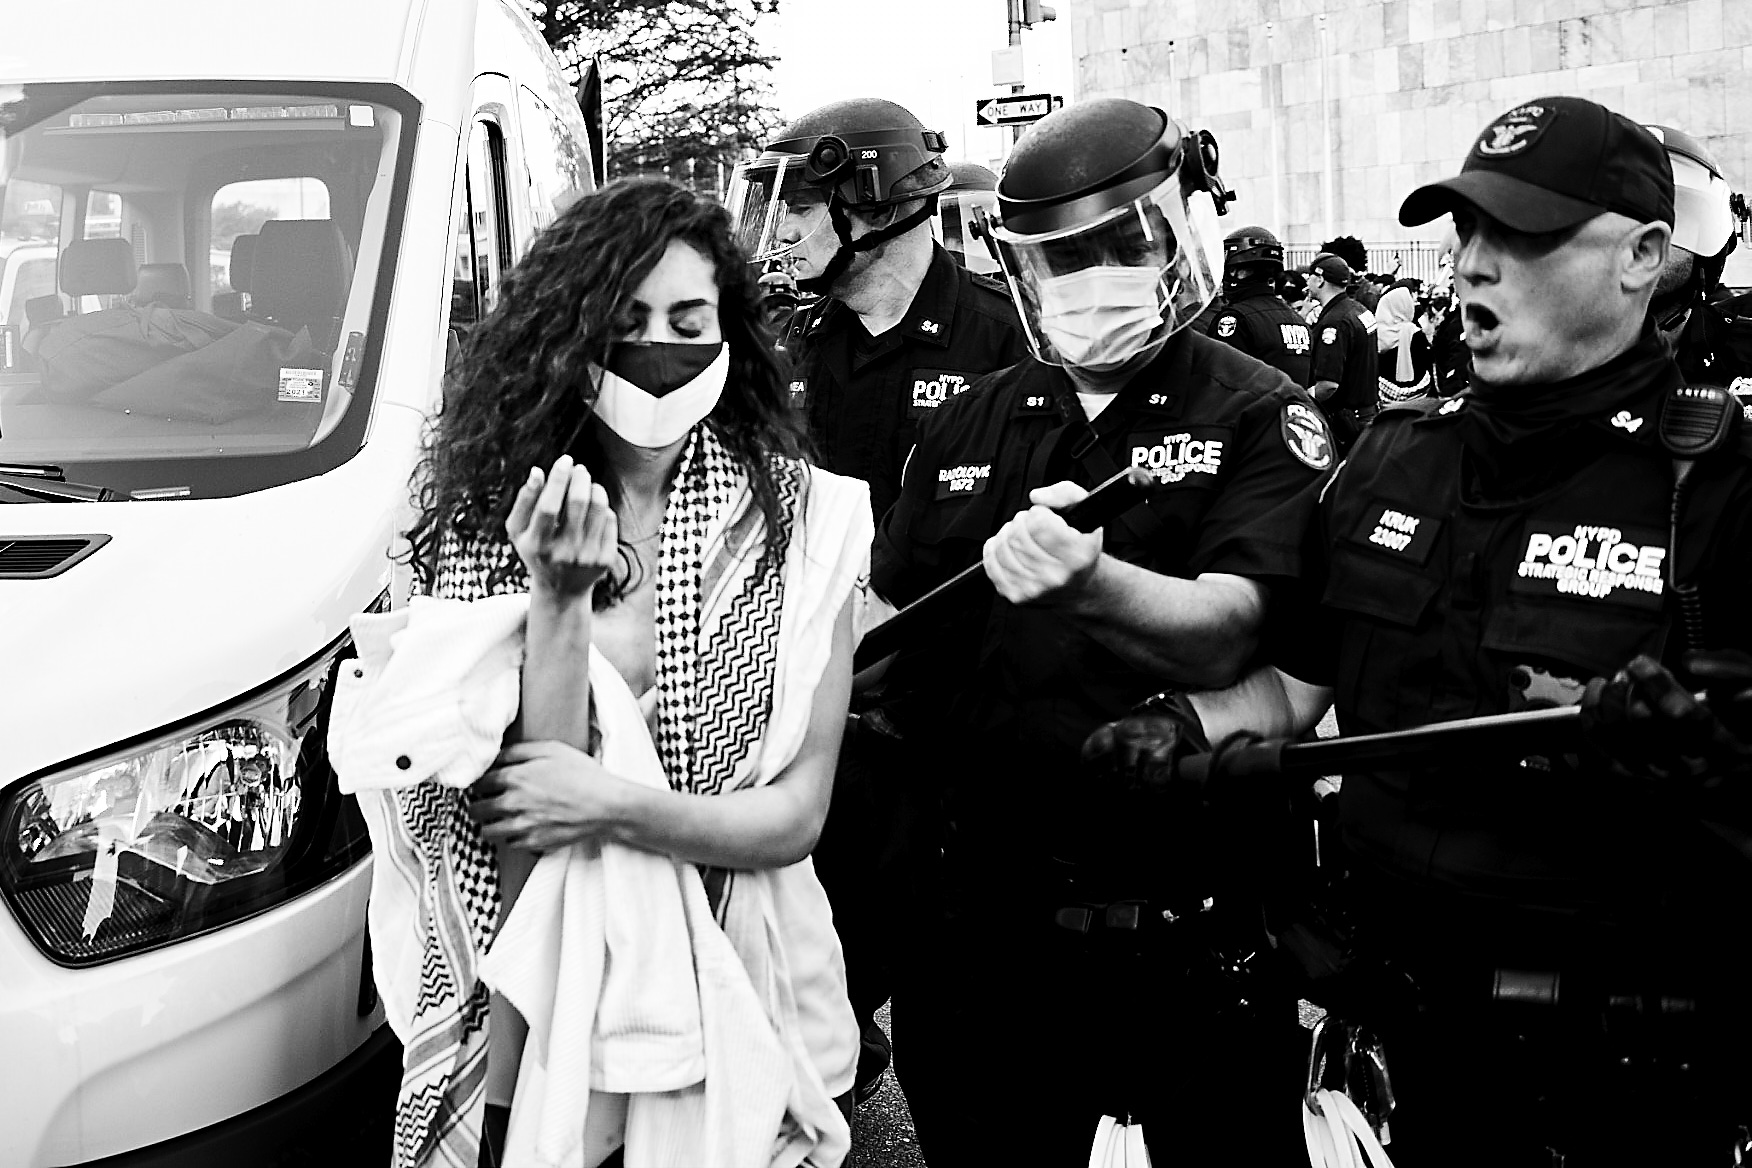 210518-1_NYC_Protests_FreePalestineIsraeliConsulateToUN_Arrests_UN_1044